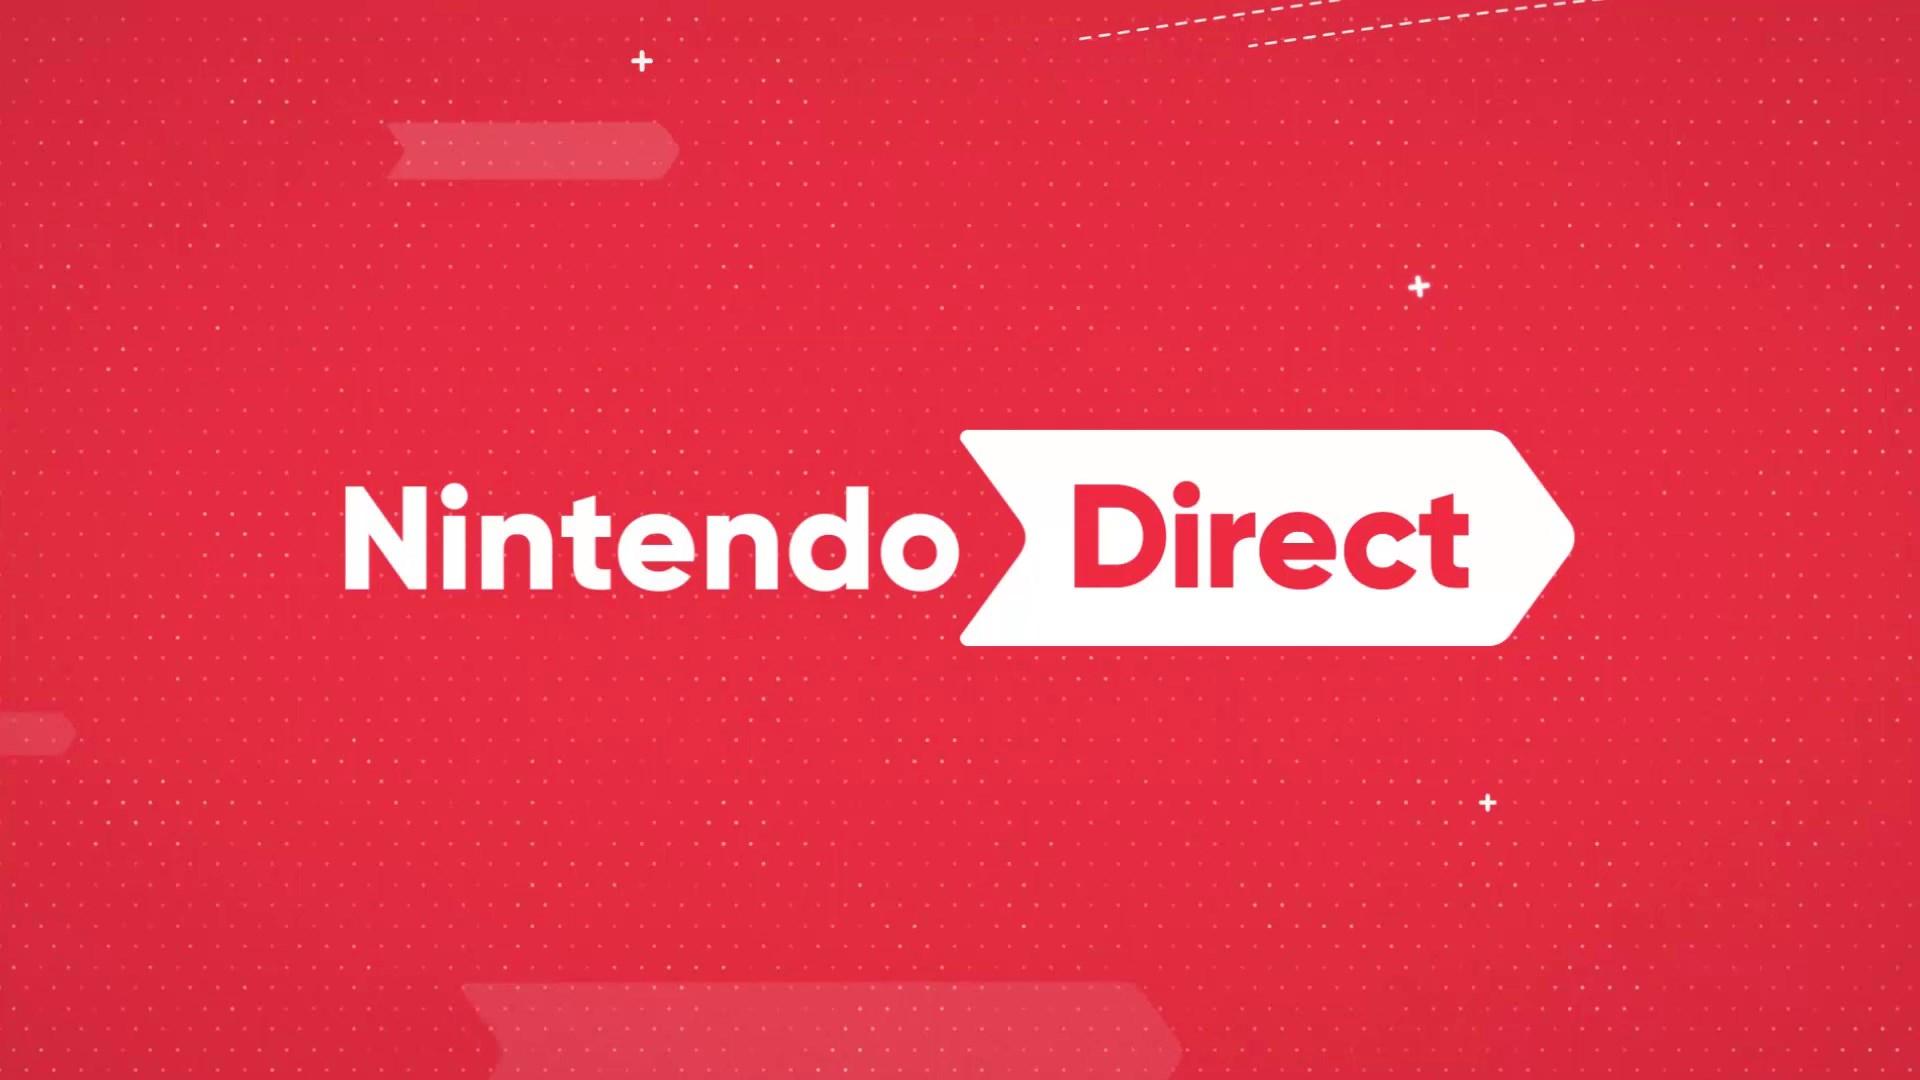 Nintendo Direct HD Wallpapers - Wallpaper Cave